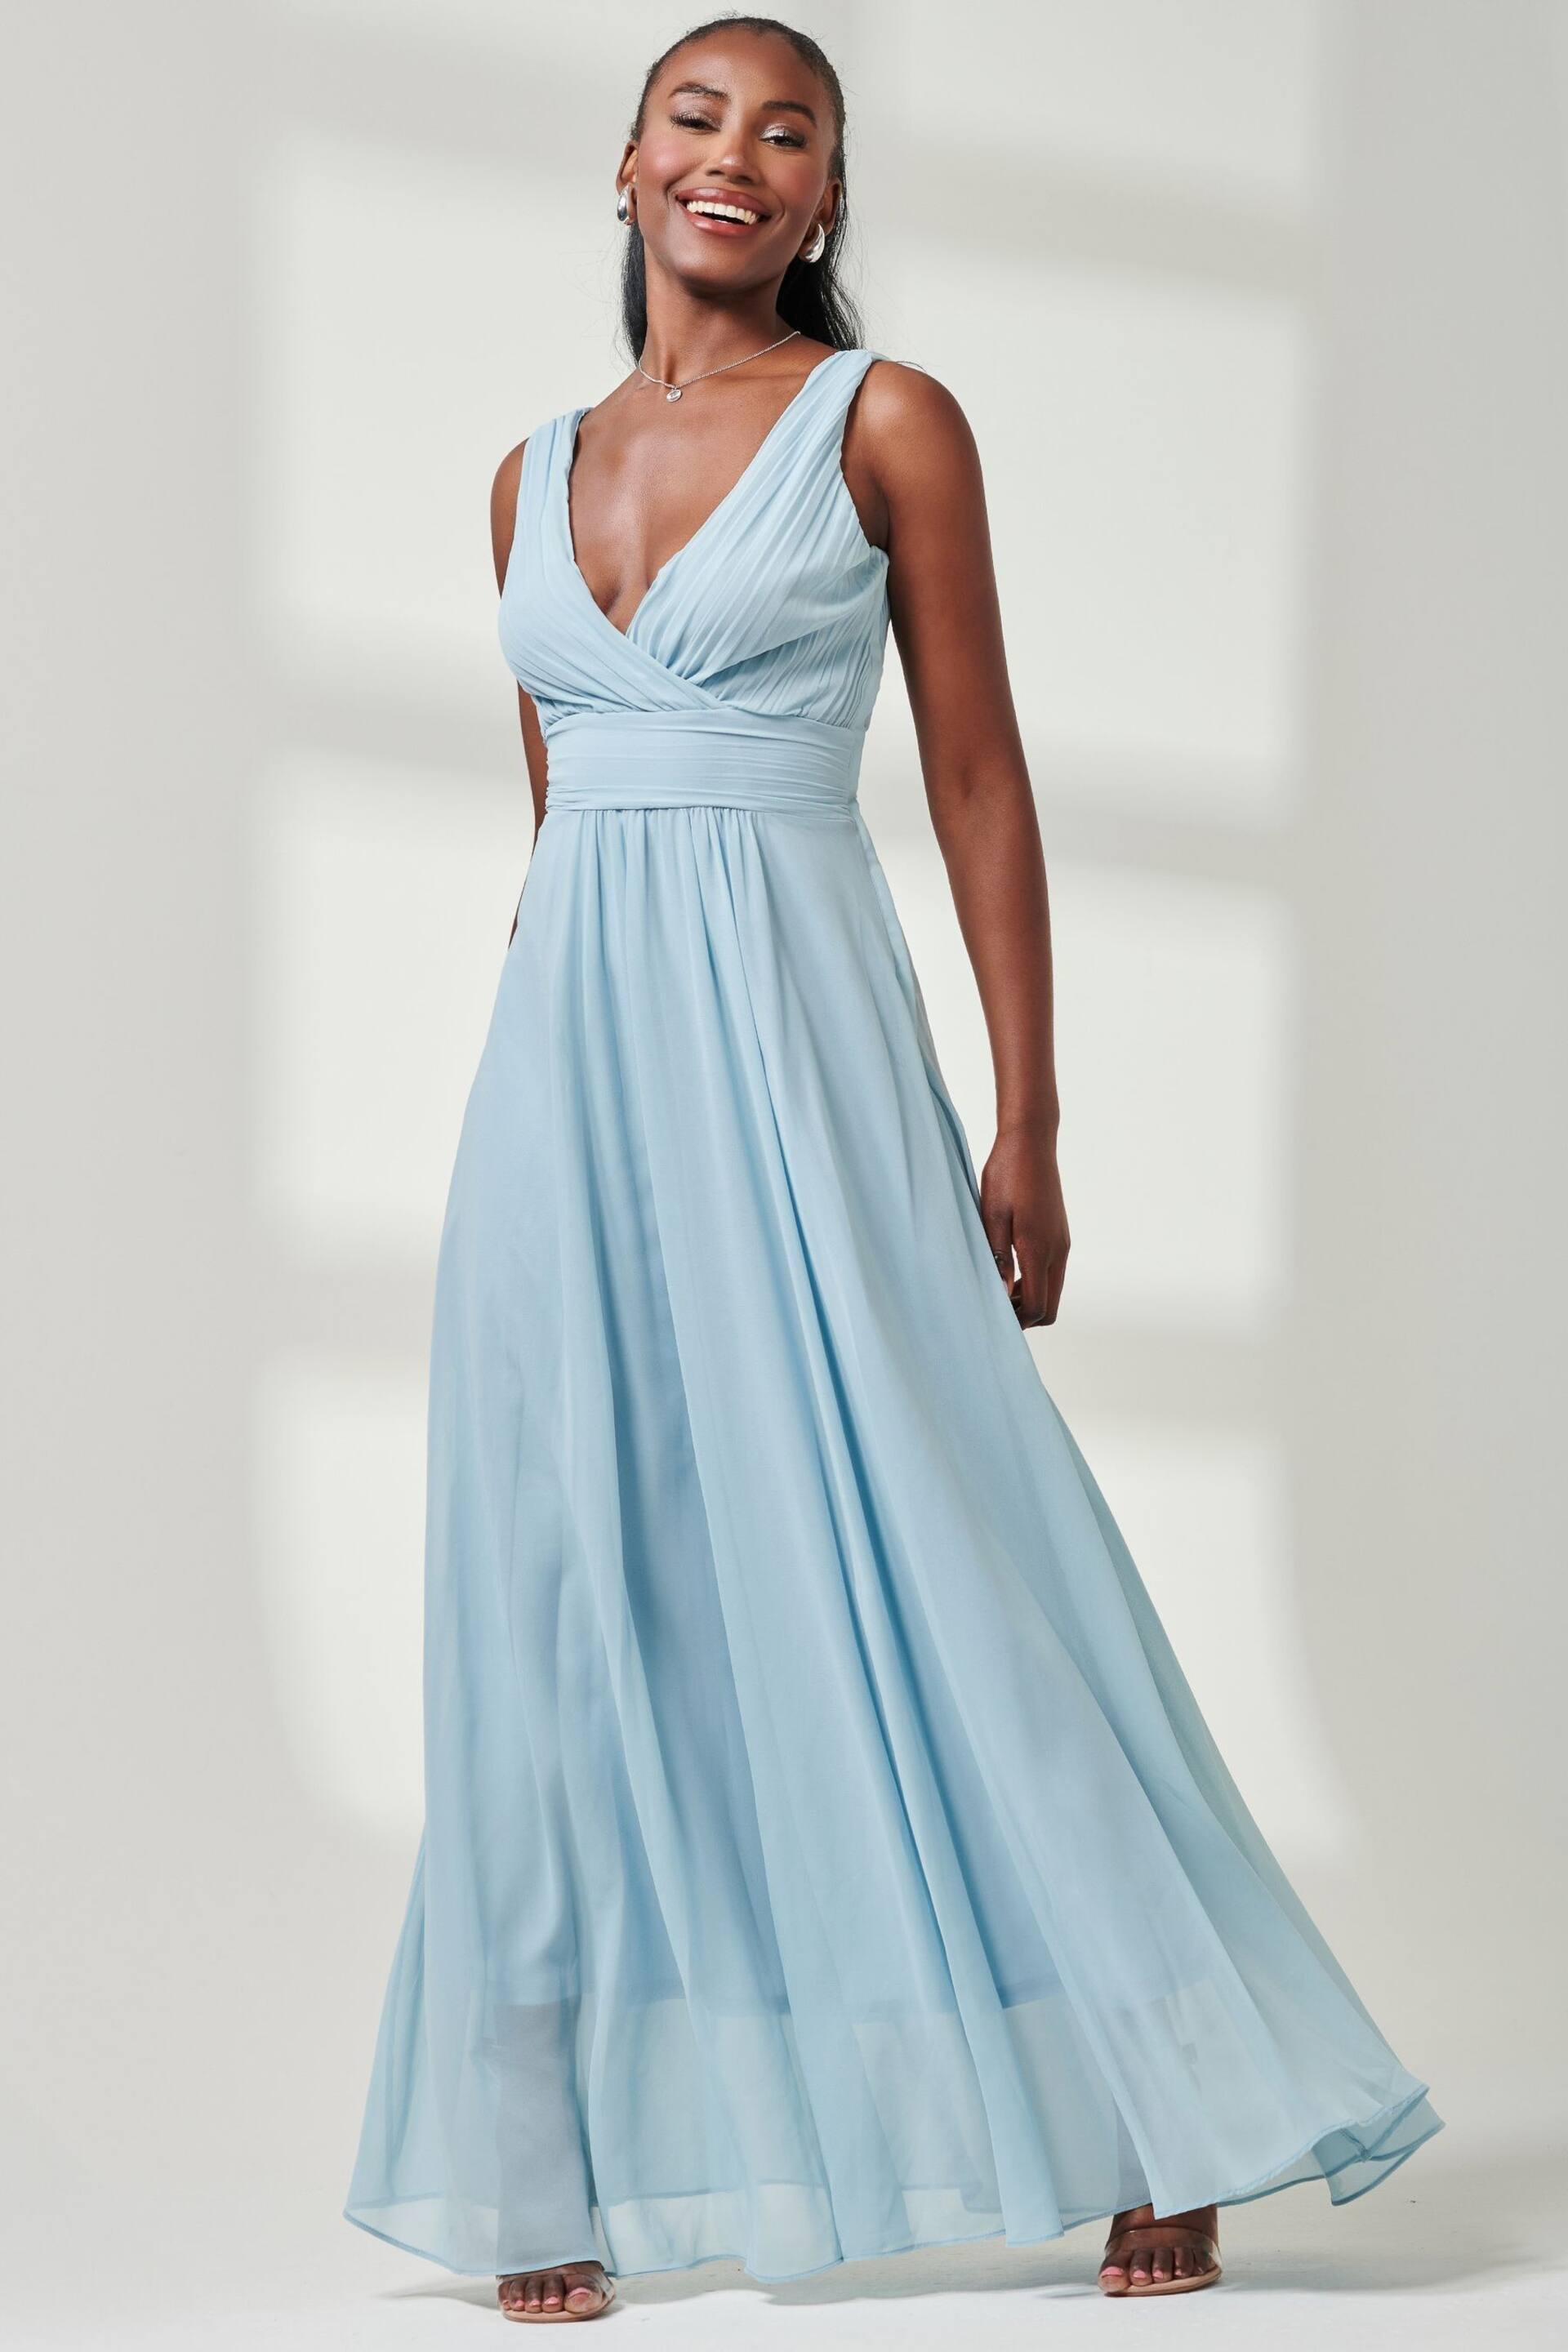 Jolie Moi Mid Blue Pleated Bodice Chiffon Maxi Dress - Image 4 of 6